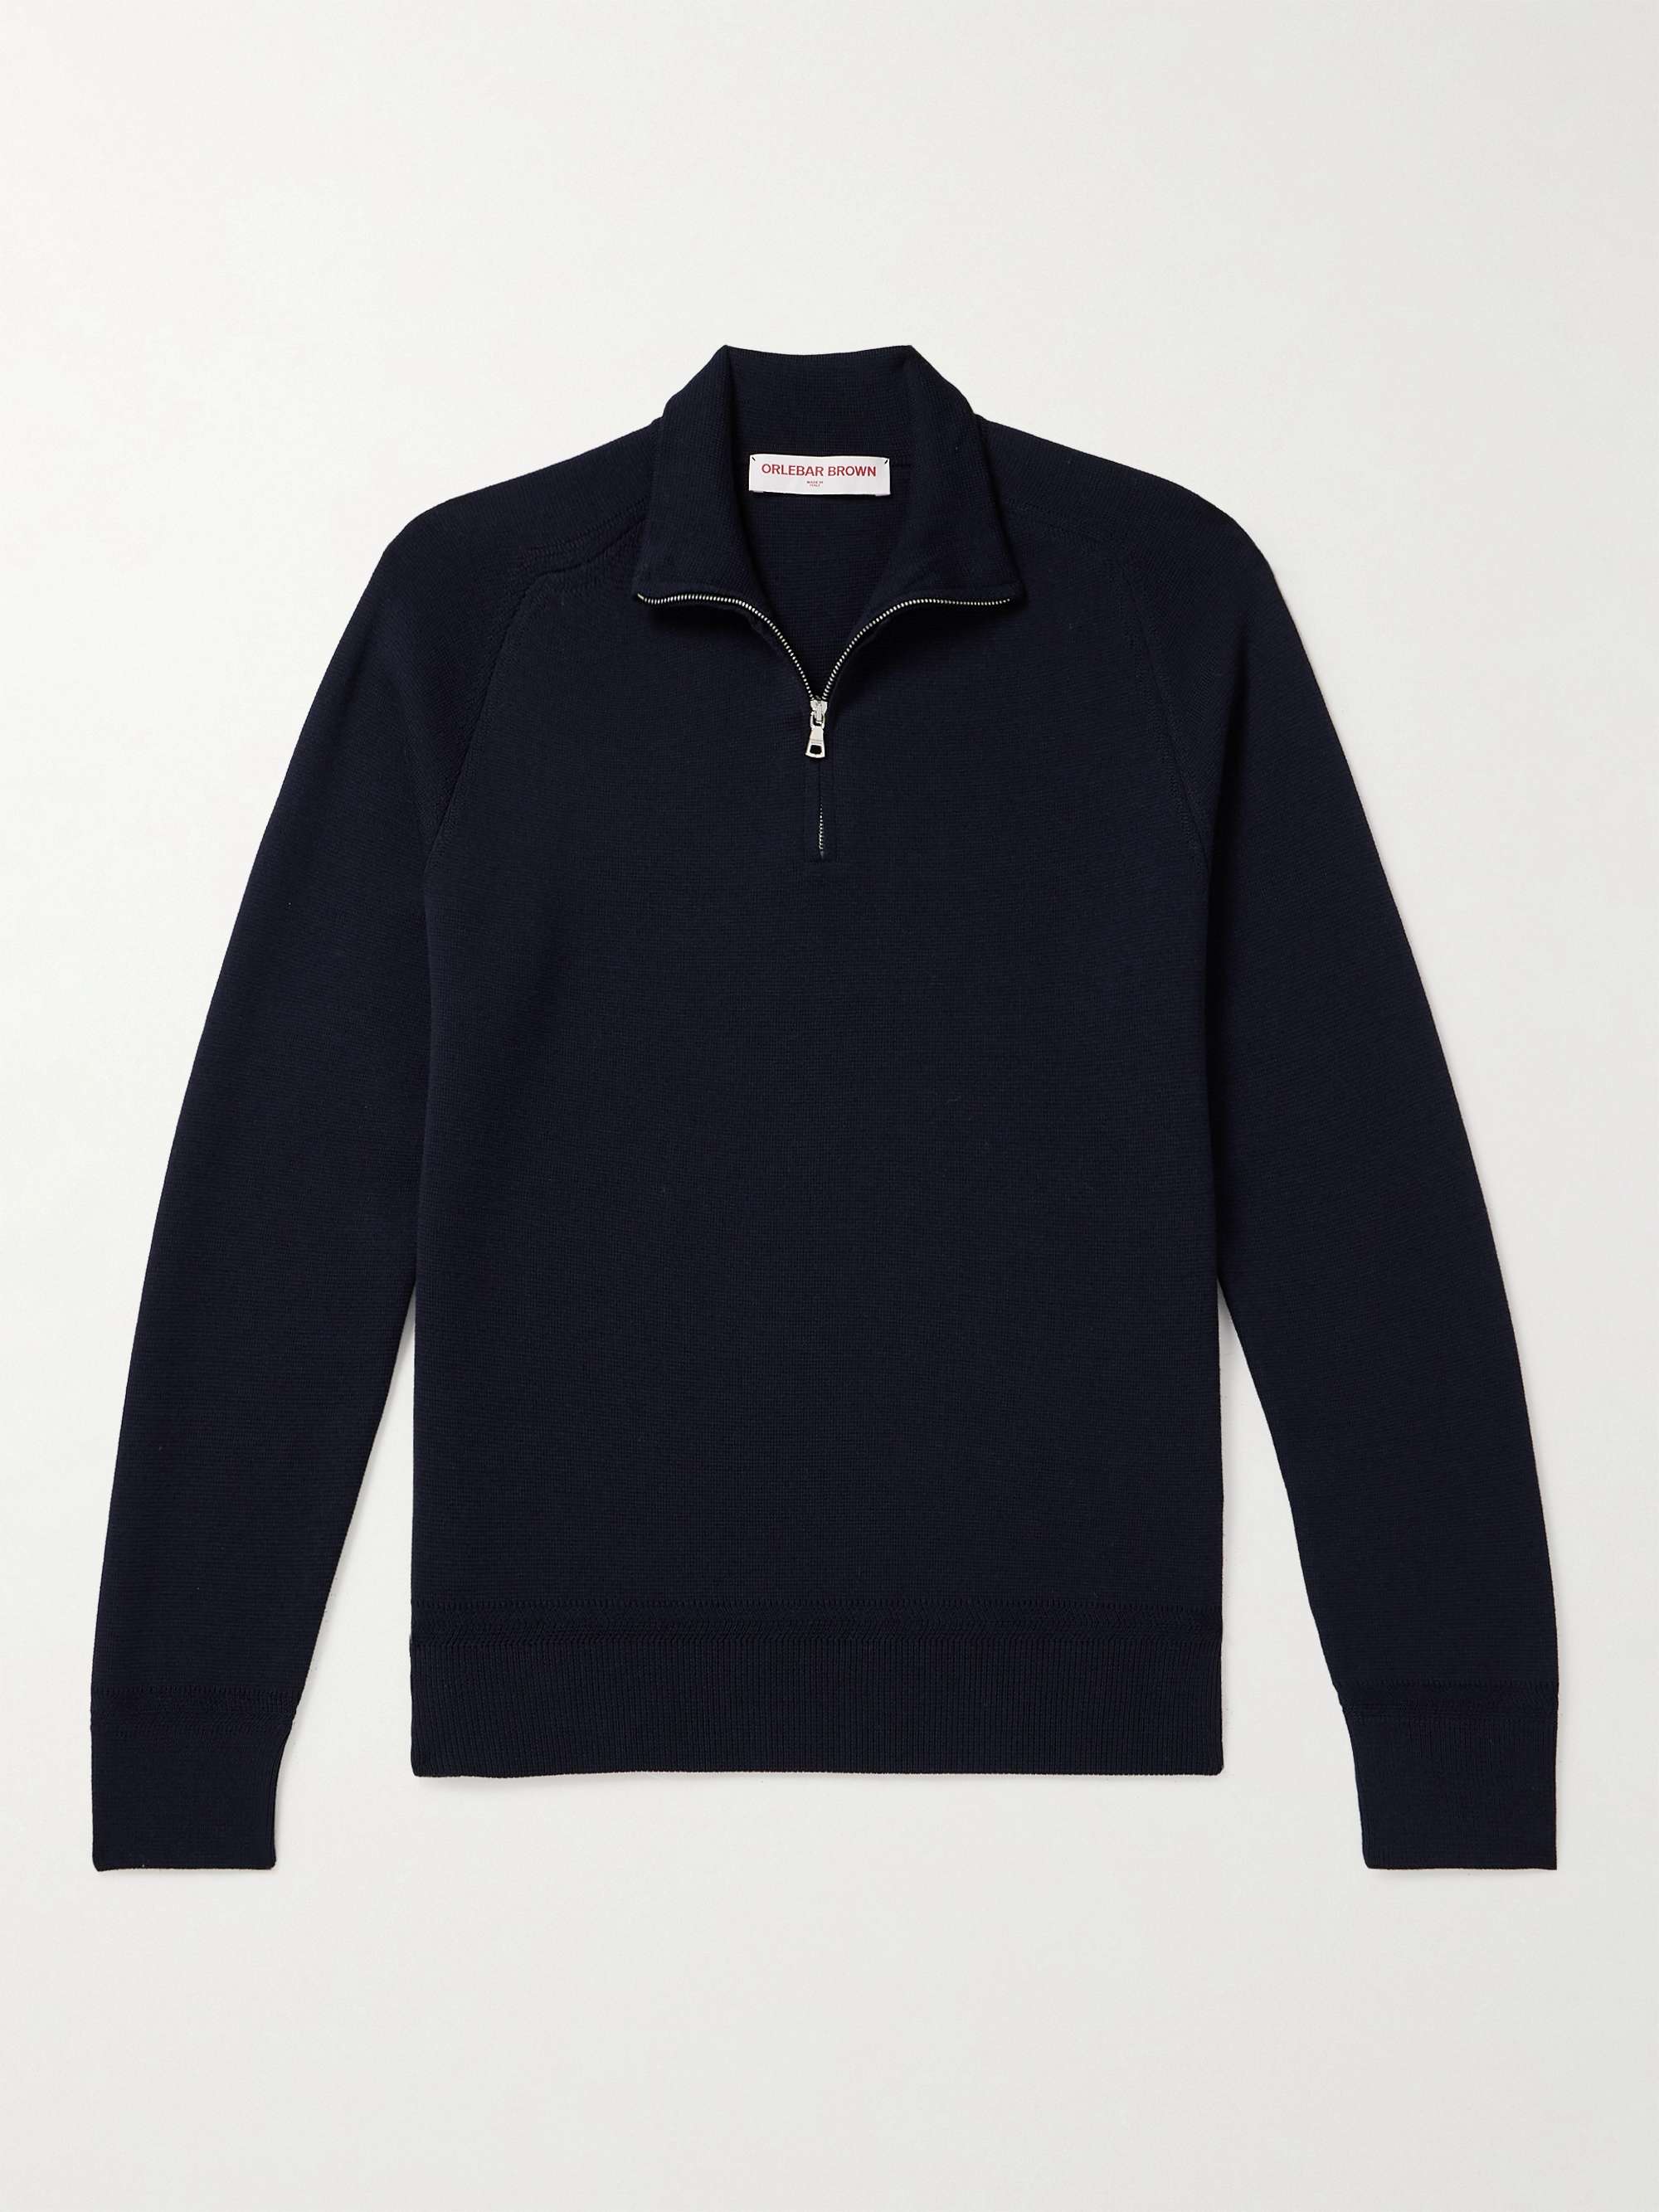 ORLEBAR BROWN Lennard Merino Wool Half-Zip Sweater for Men | MR PORTER